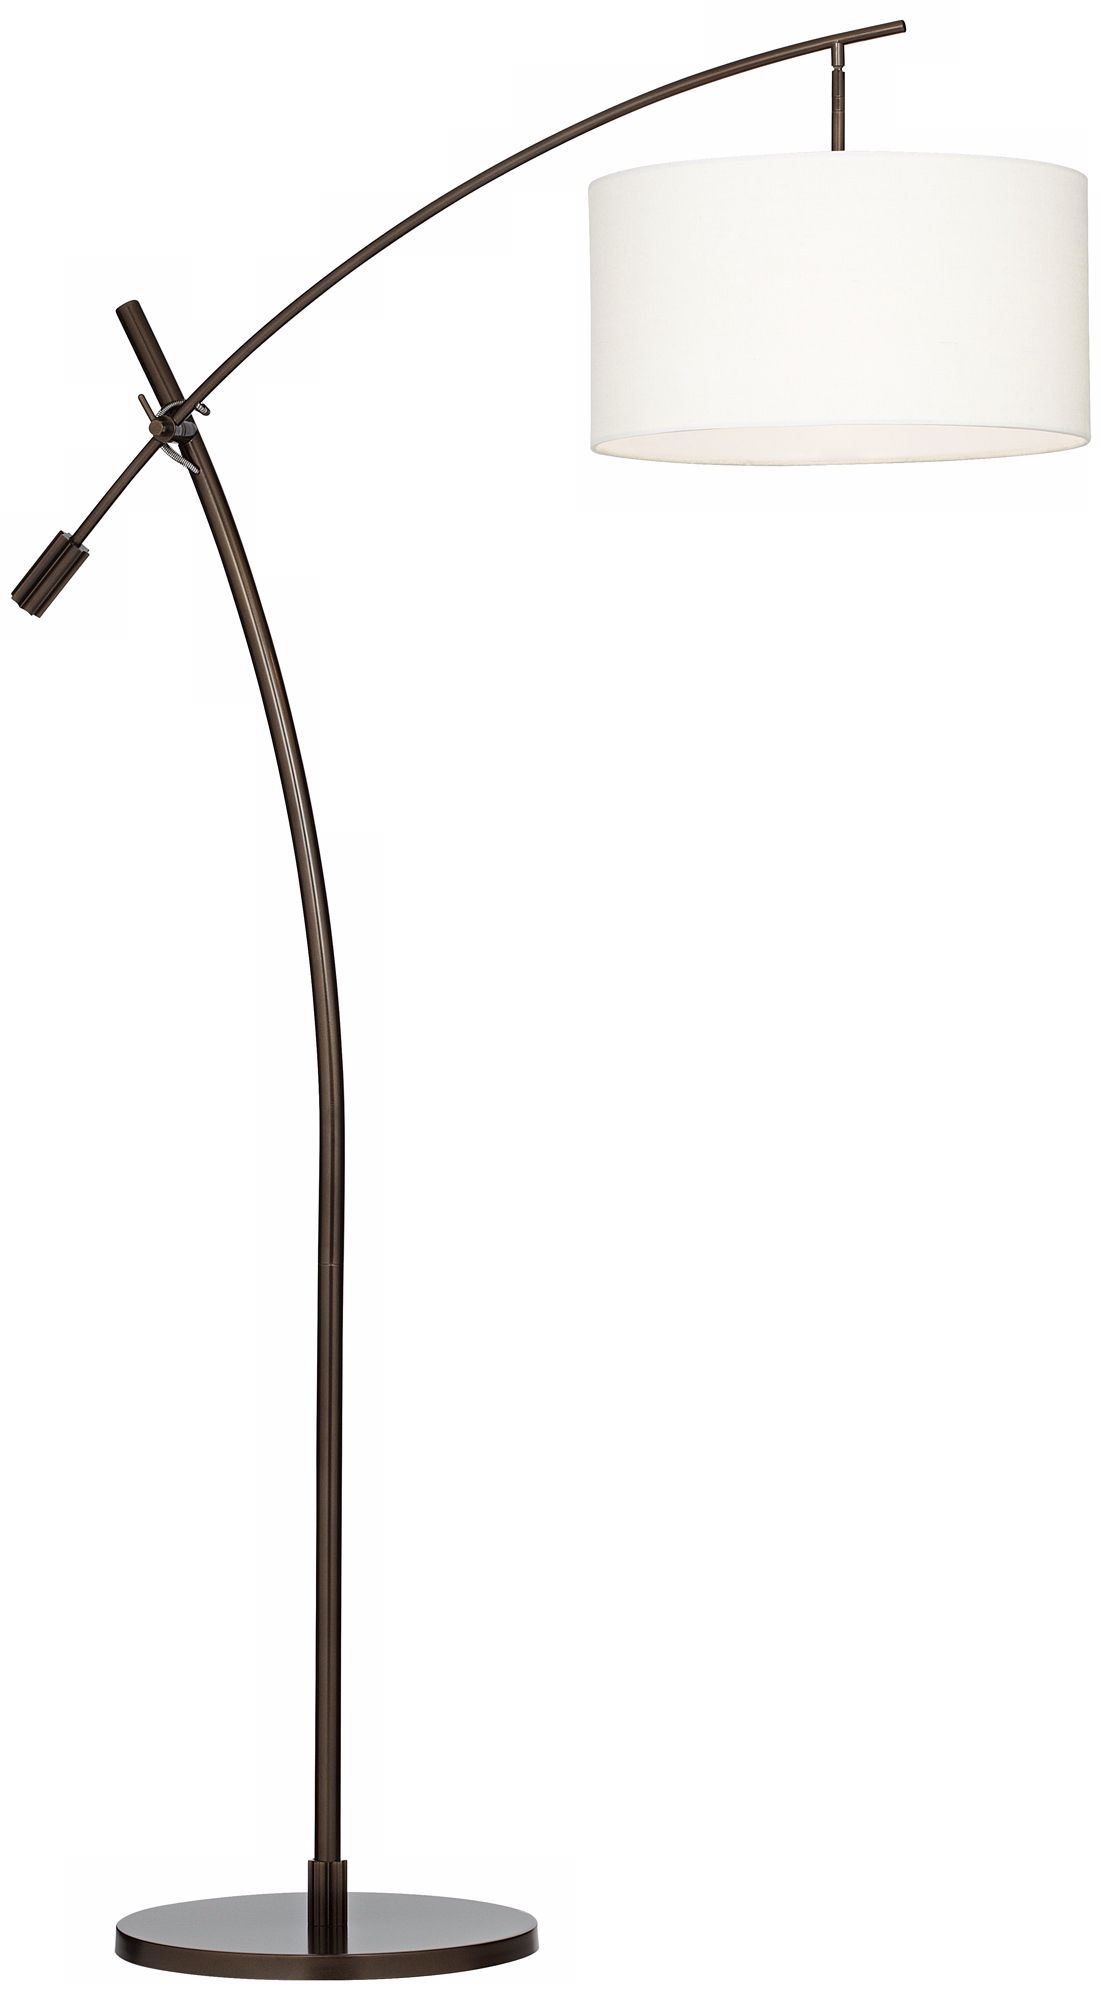 Bronze Boom Arc Floor Lamp with Linen Shade - Image 0